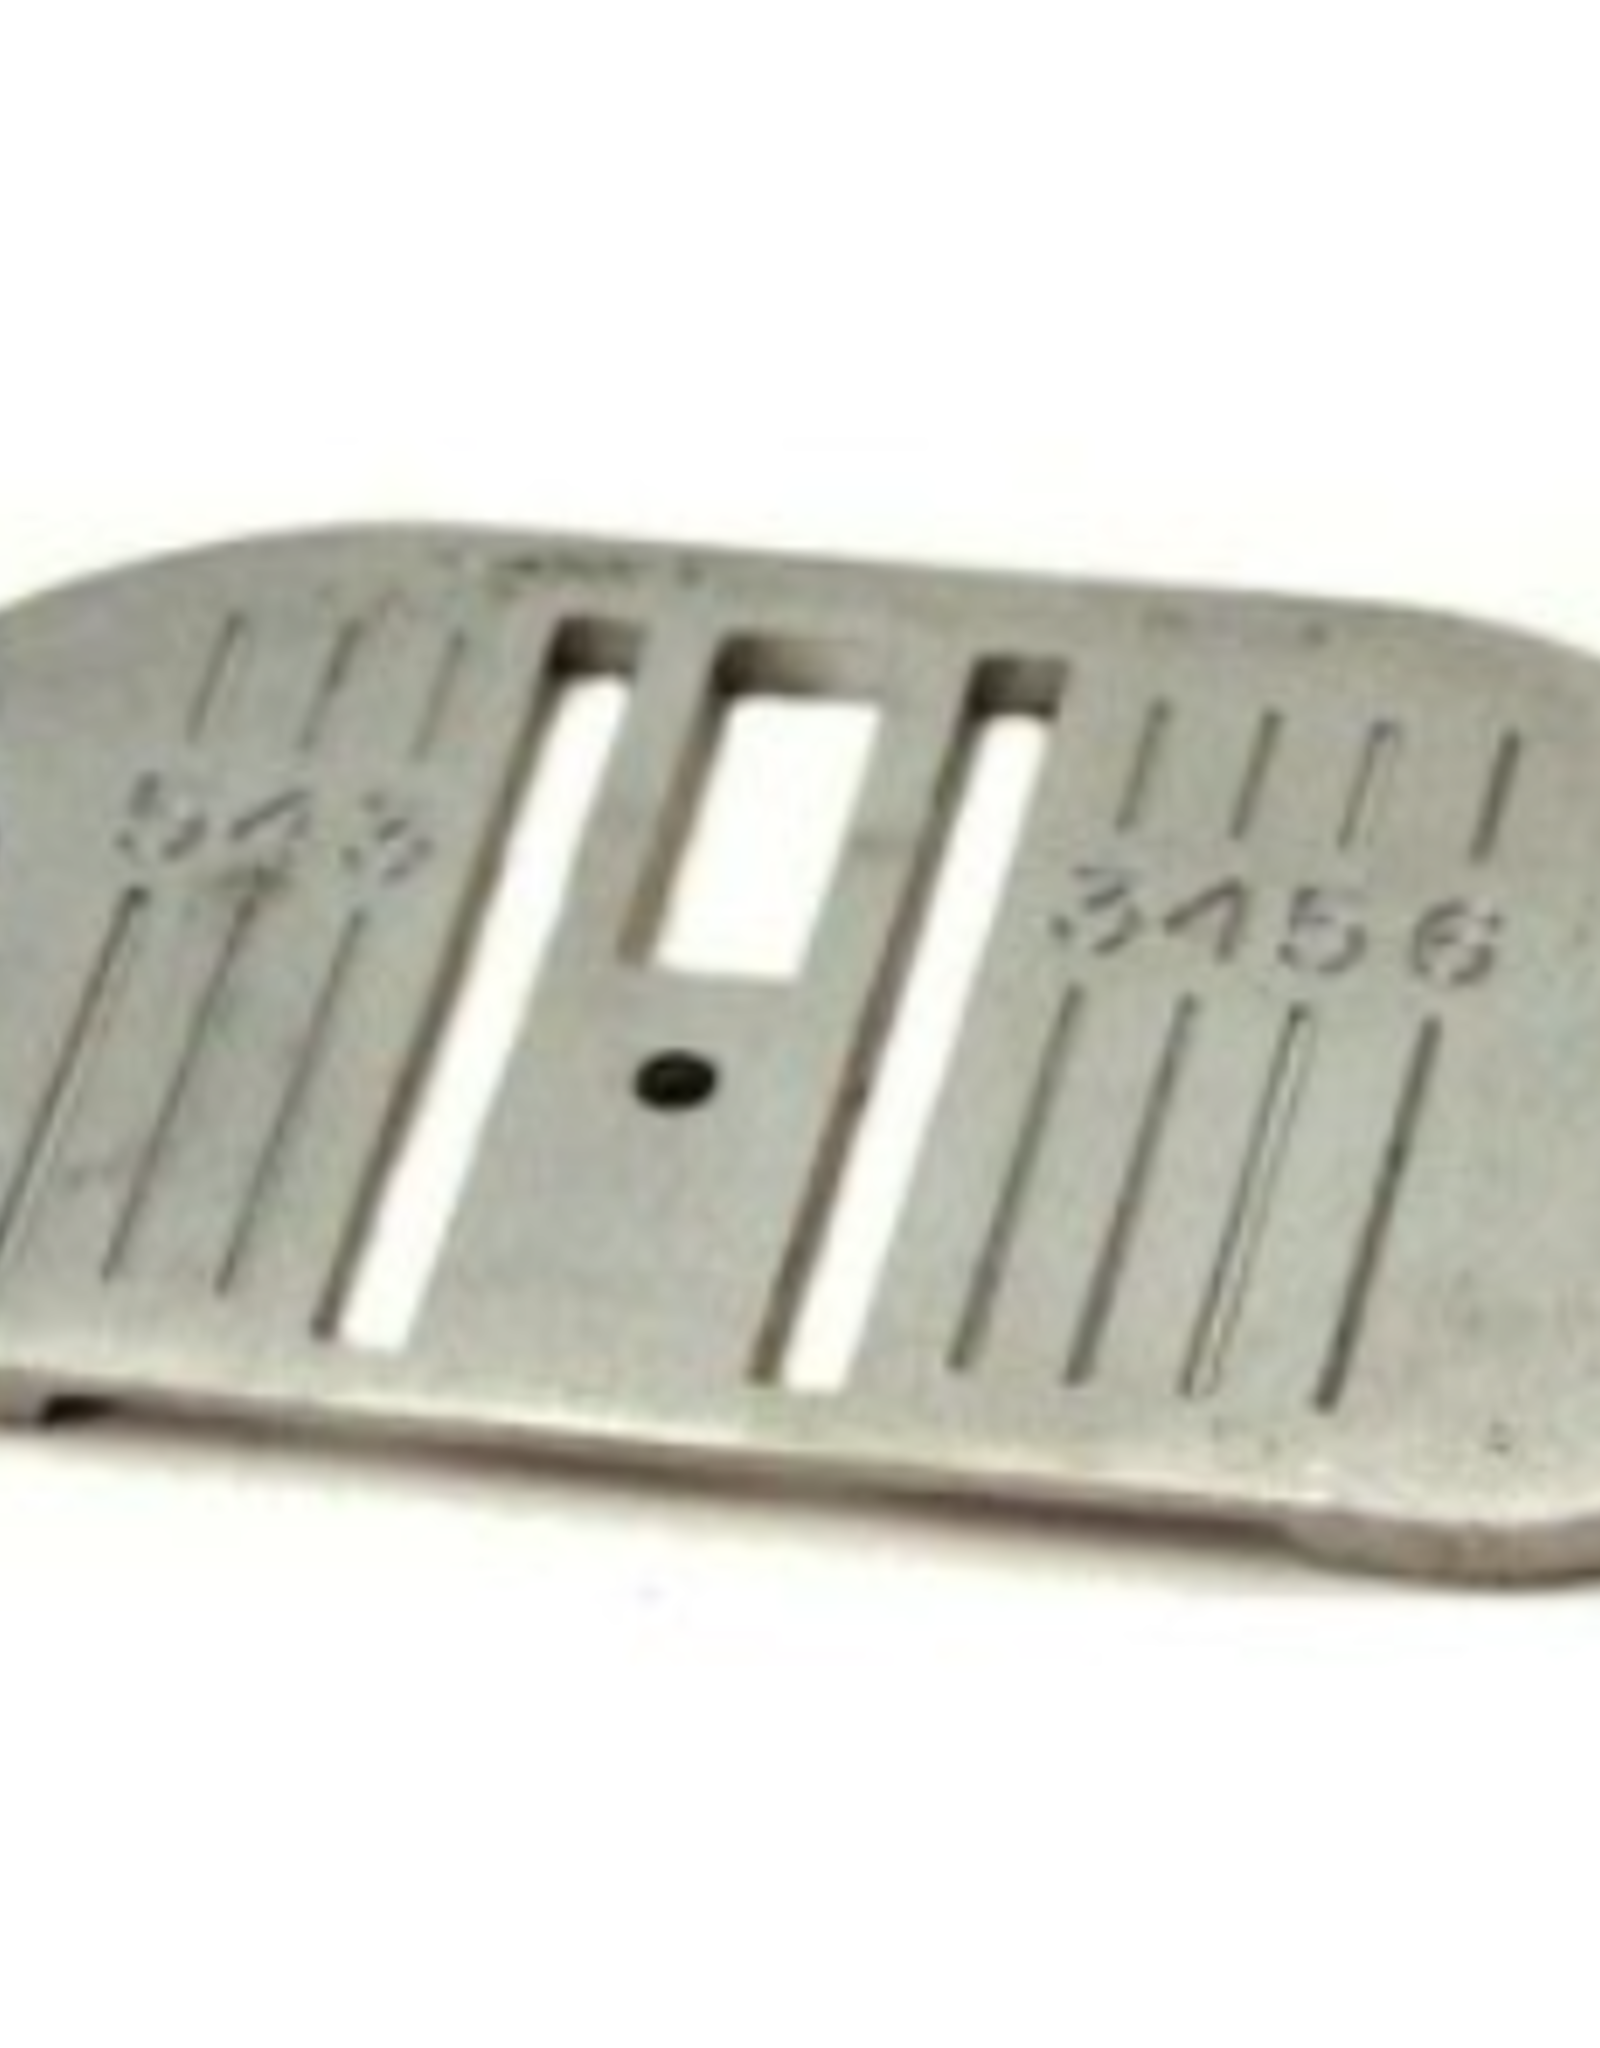 Used Singer needle plate - 171137